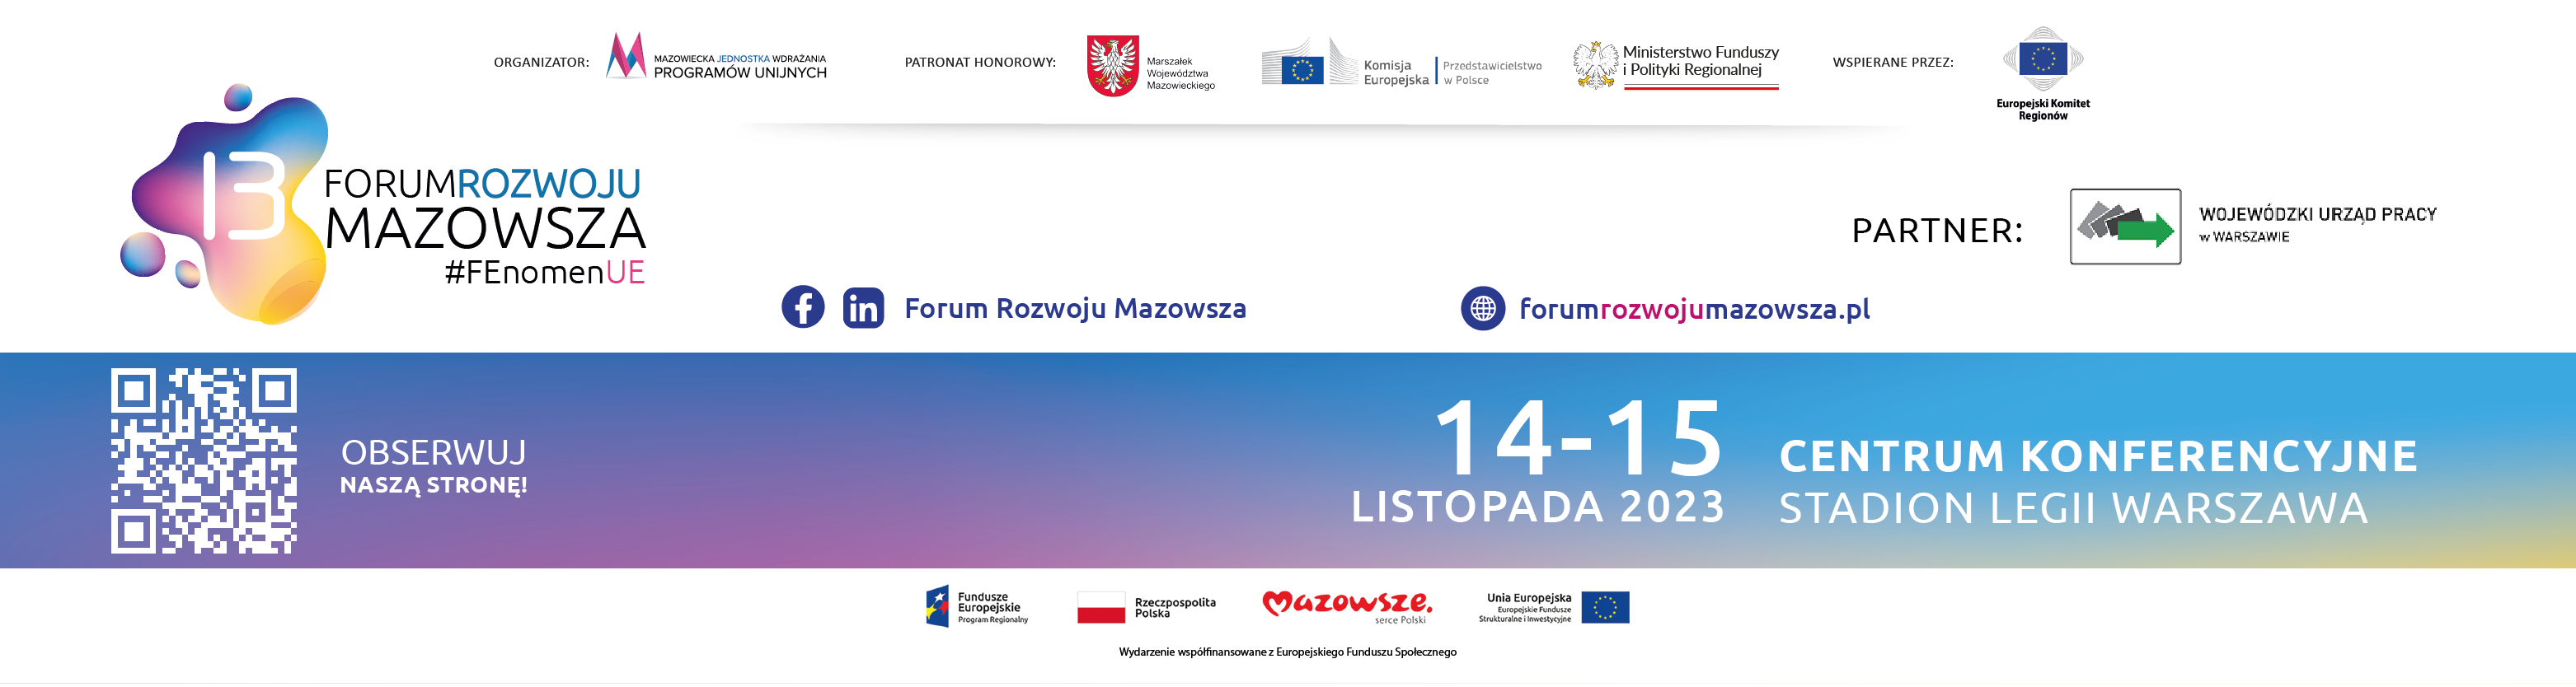 baner 13 forum rozwoju mazowsza